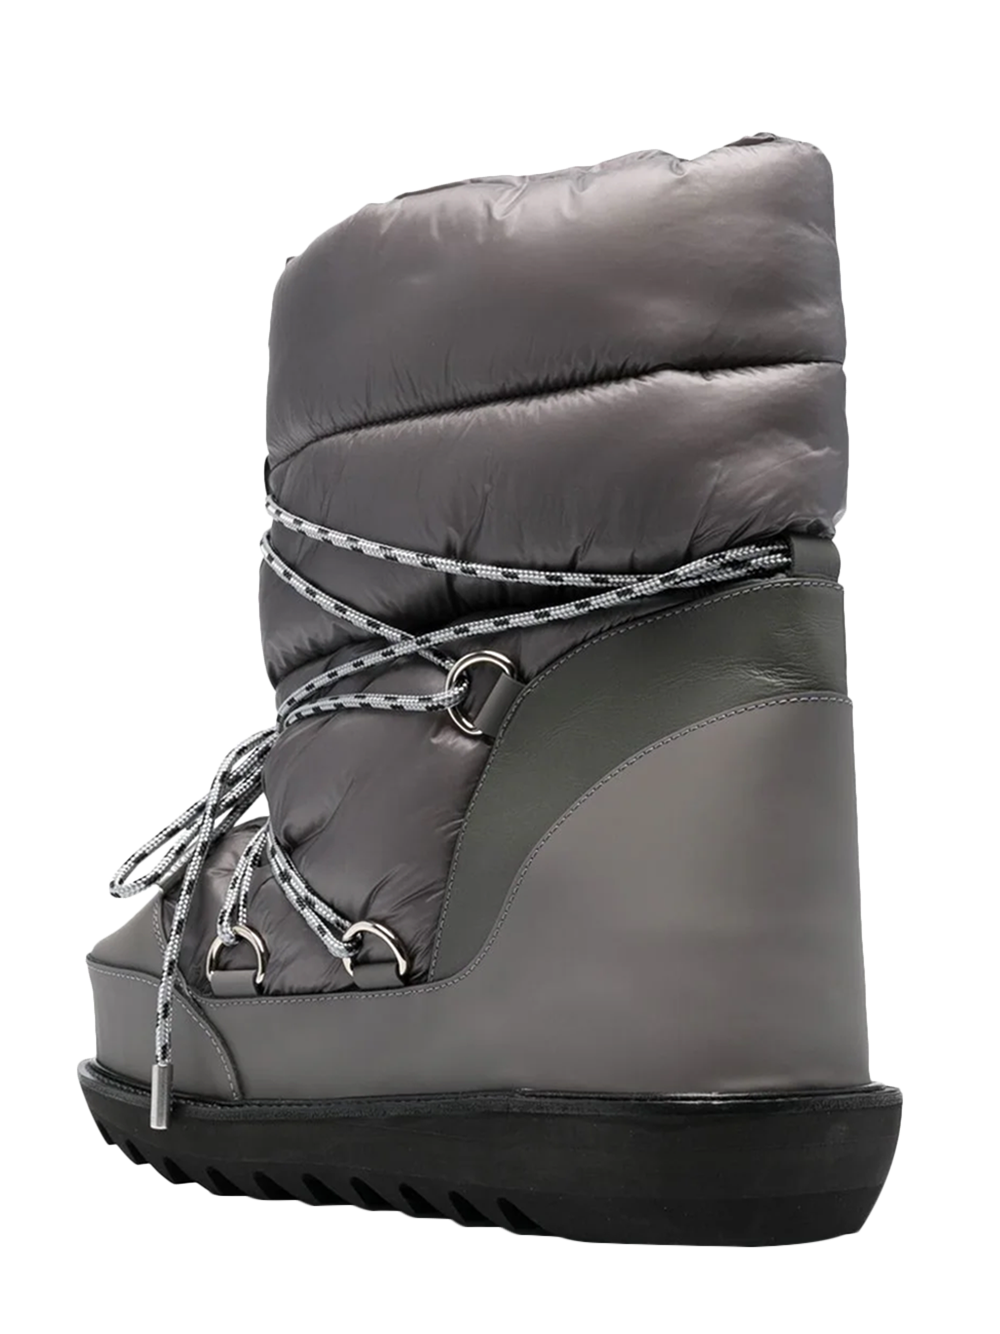 sacai-Mens-Boots-Grey-3